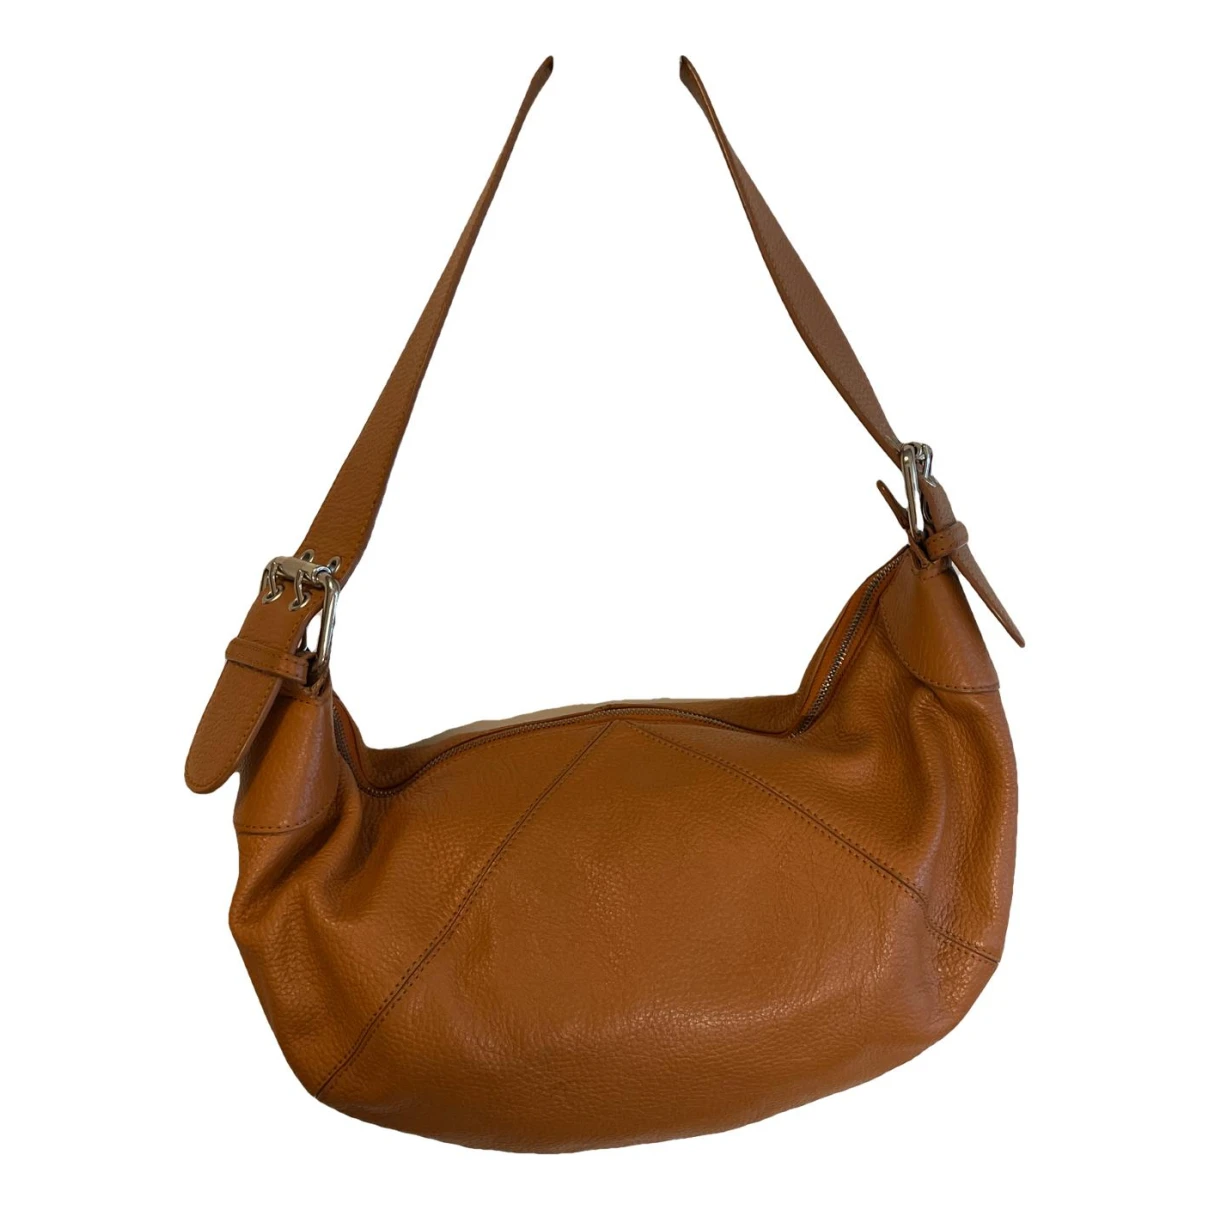 Pre-owned Furla Leather Handbag In Orange